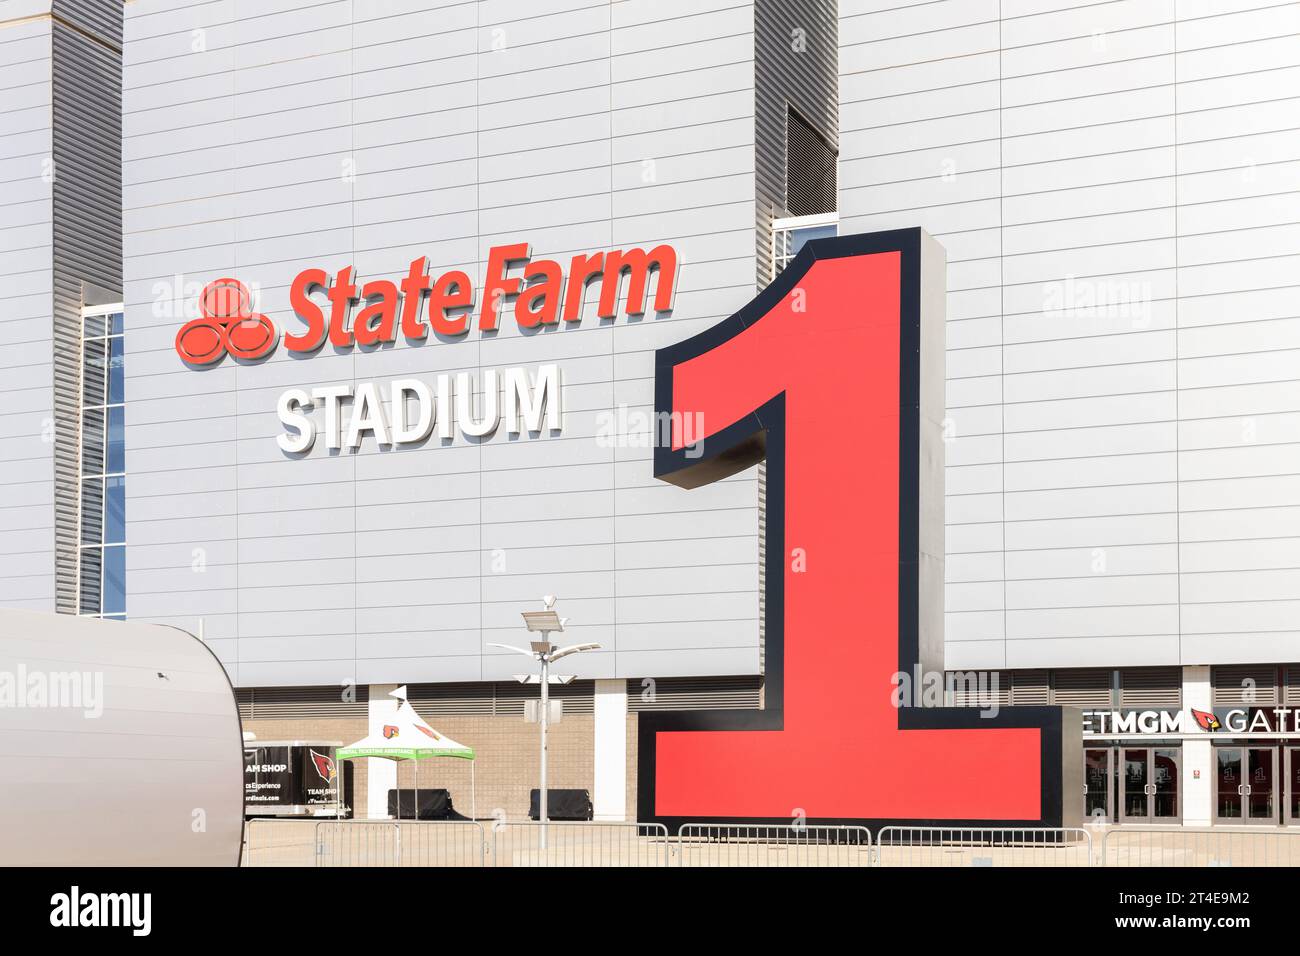 State Farm Stadium is home to the NFL's Arizona Cardinals. Stock Photo